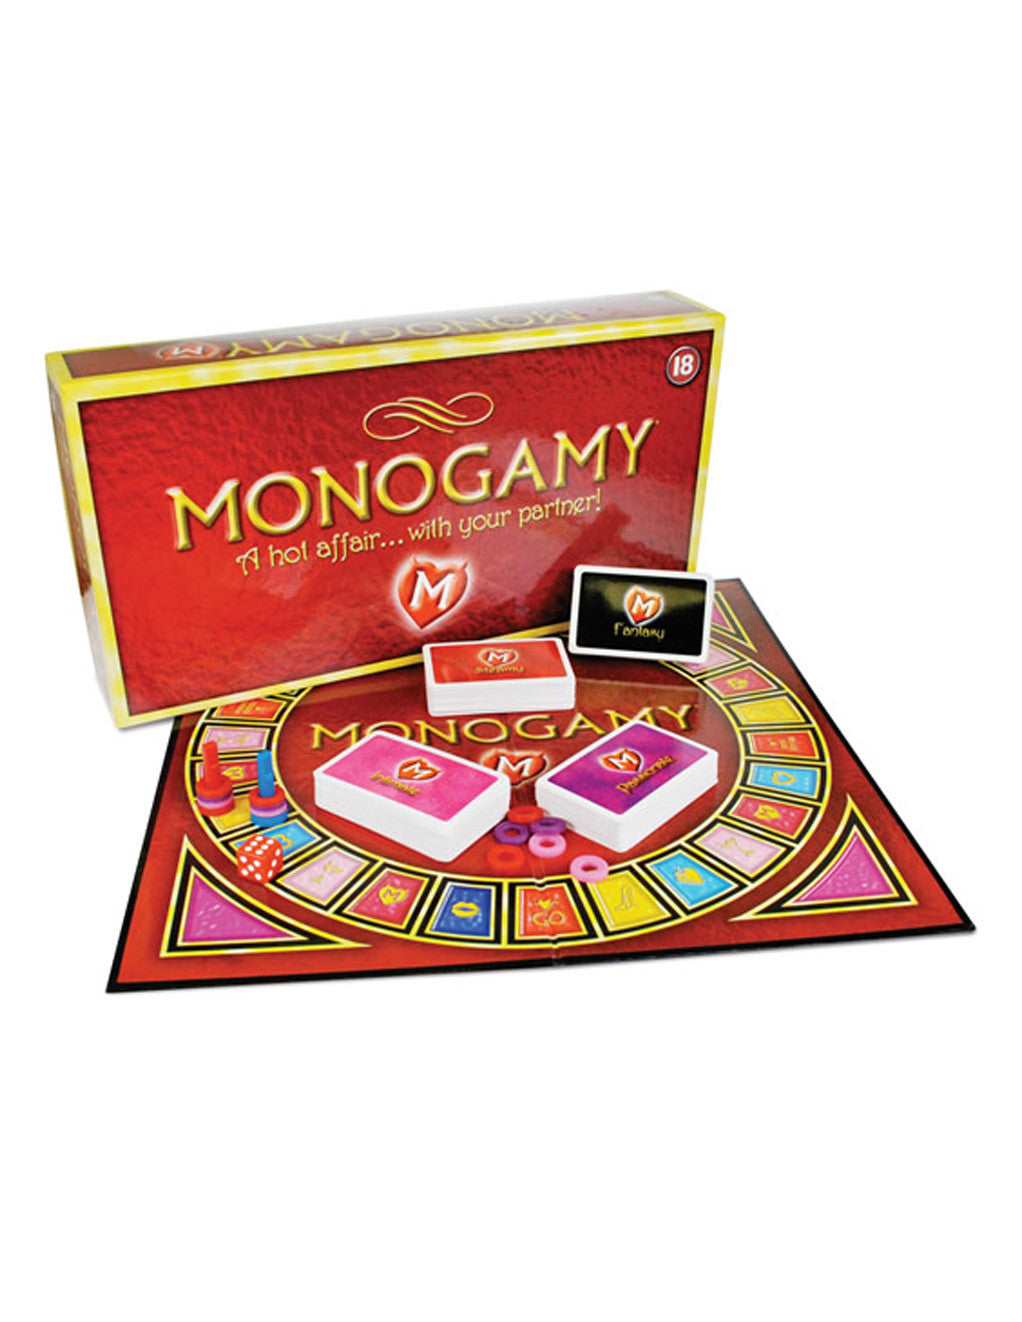 Monogamy: A Hot Affair Couples' Board Game